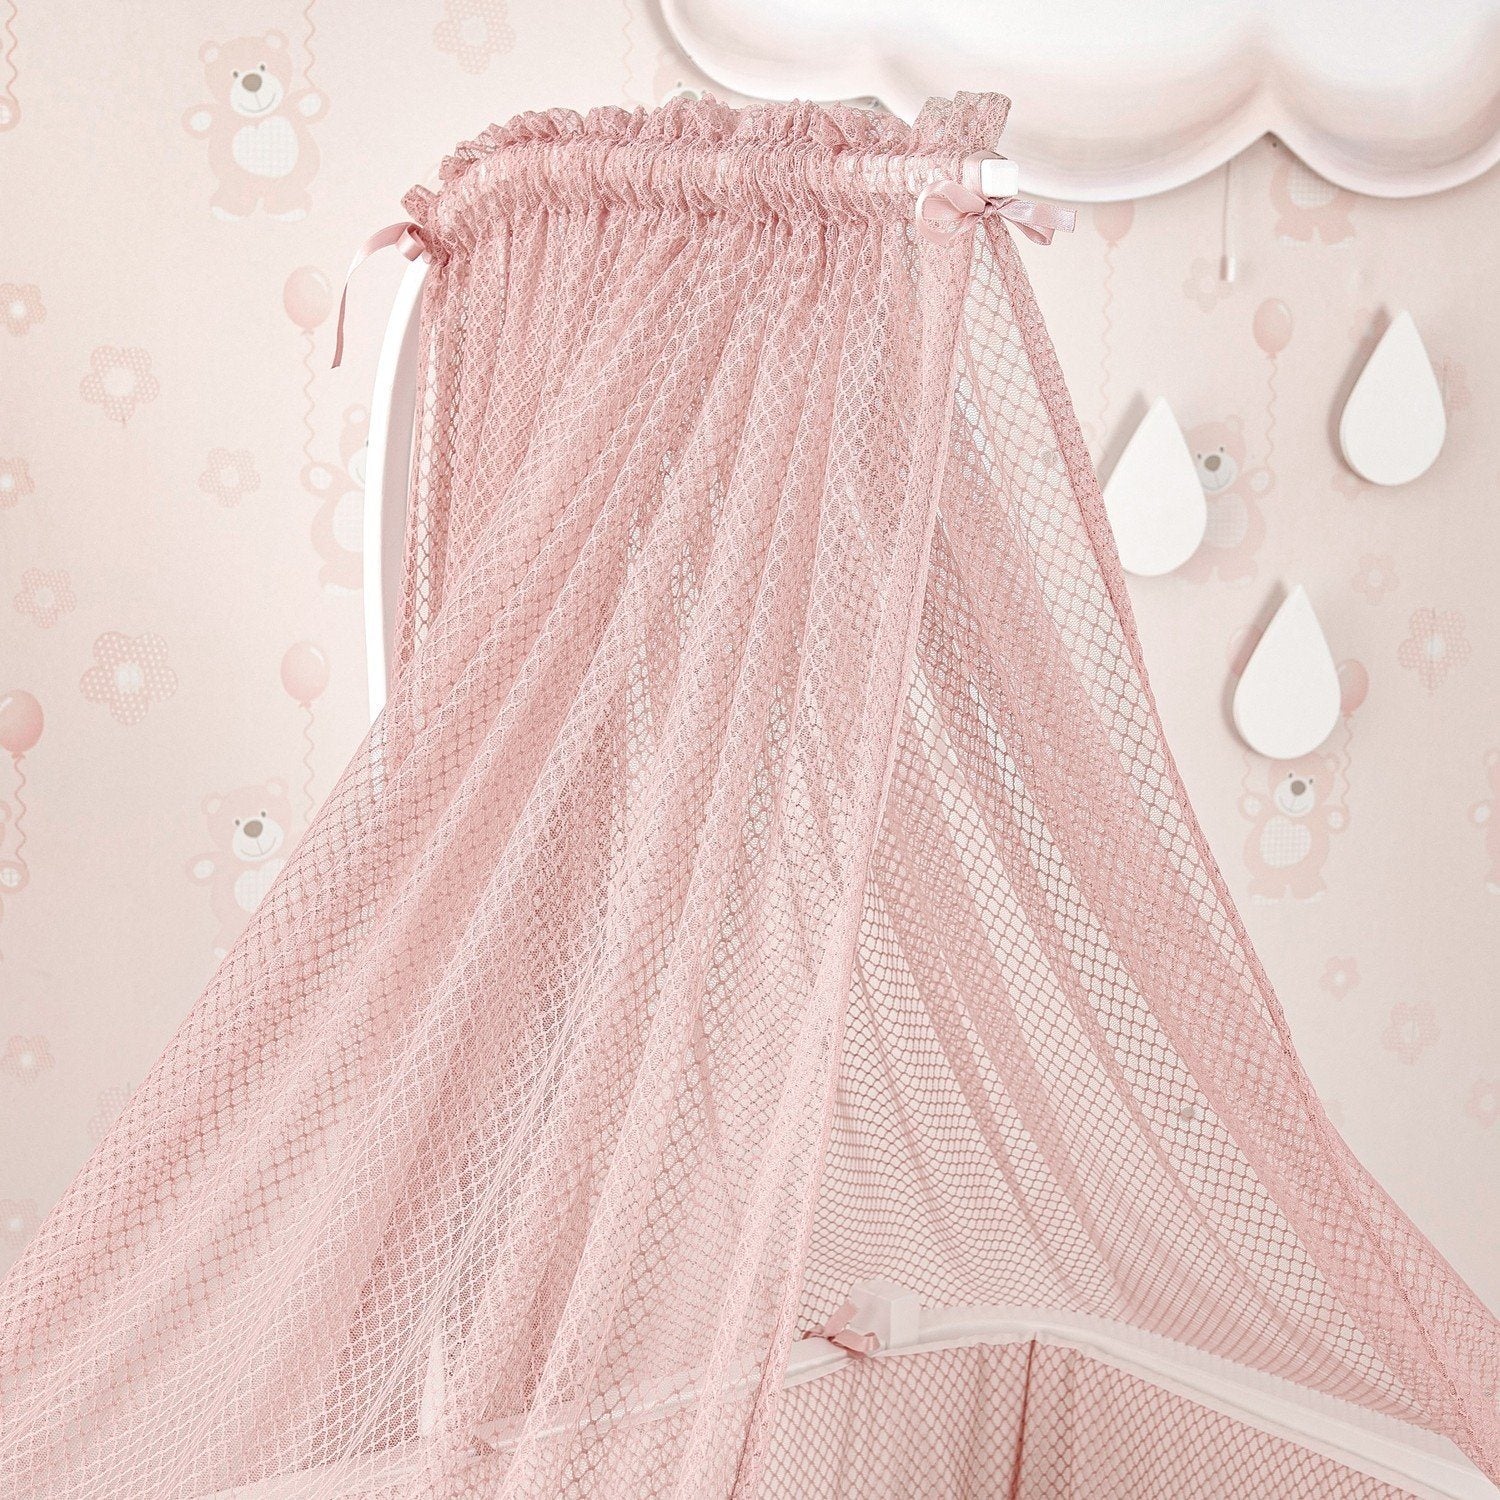 Royal White Wood Pink Textile Mum-side Cot till 12 months Baby Crib MELTEM SMART 